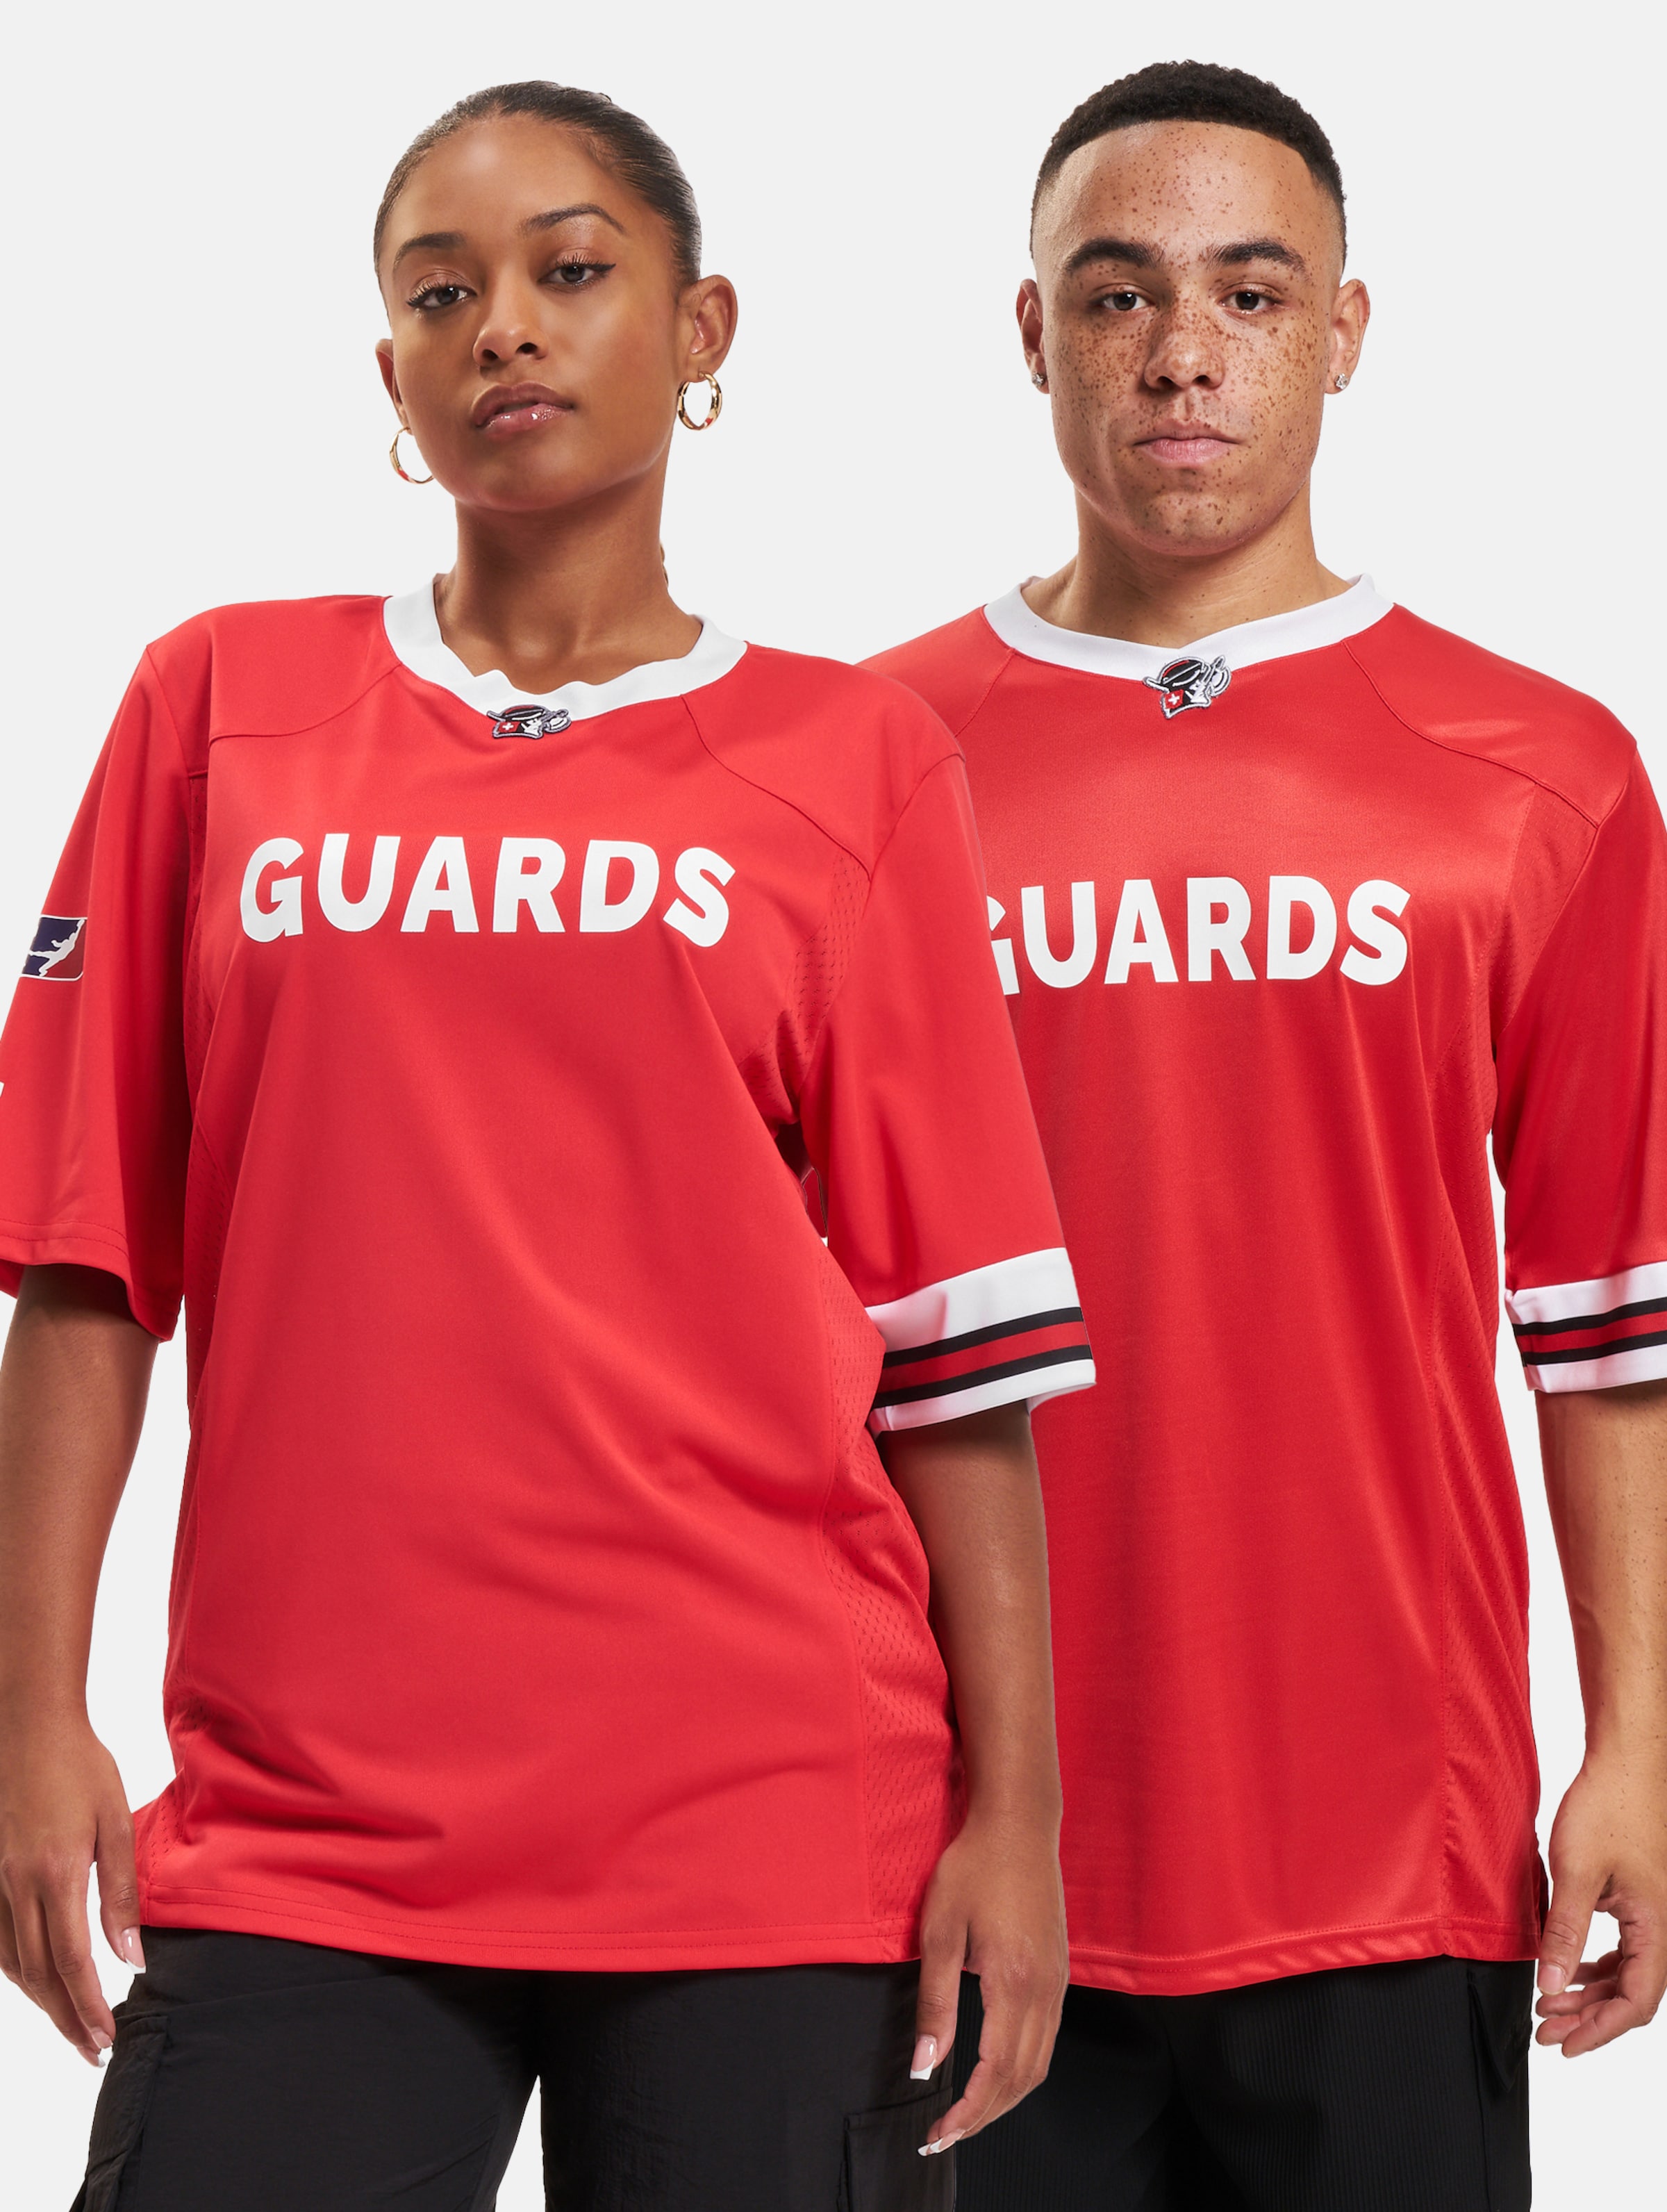 European League Of Football 1018 Helvetic Guards Authentic Game T-Shirt Vrouwen op kleur rood, Maat XS